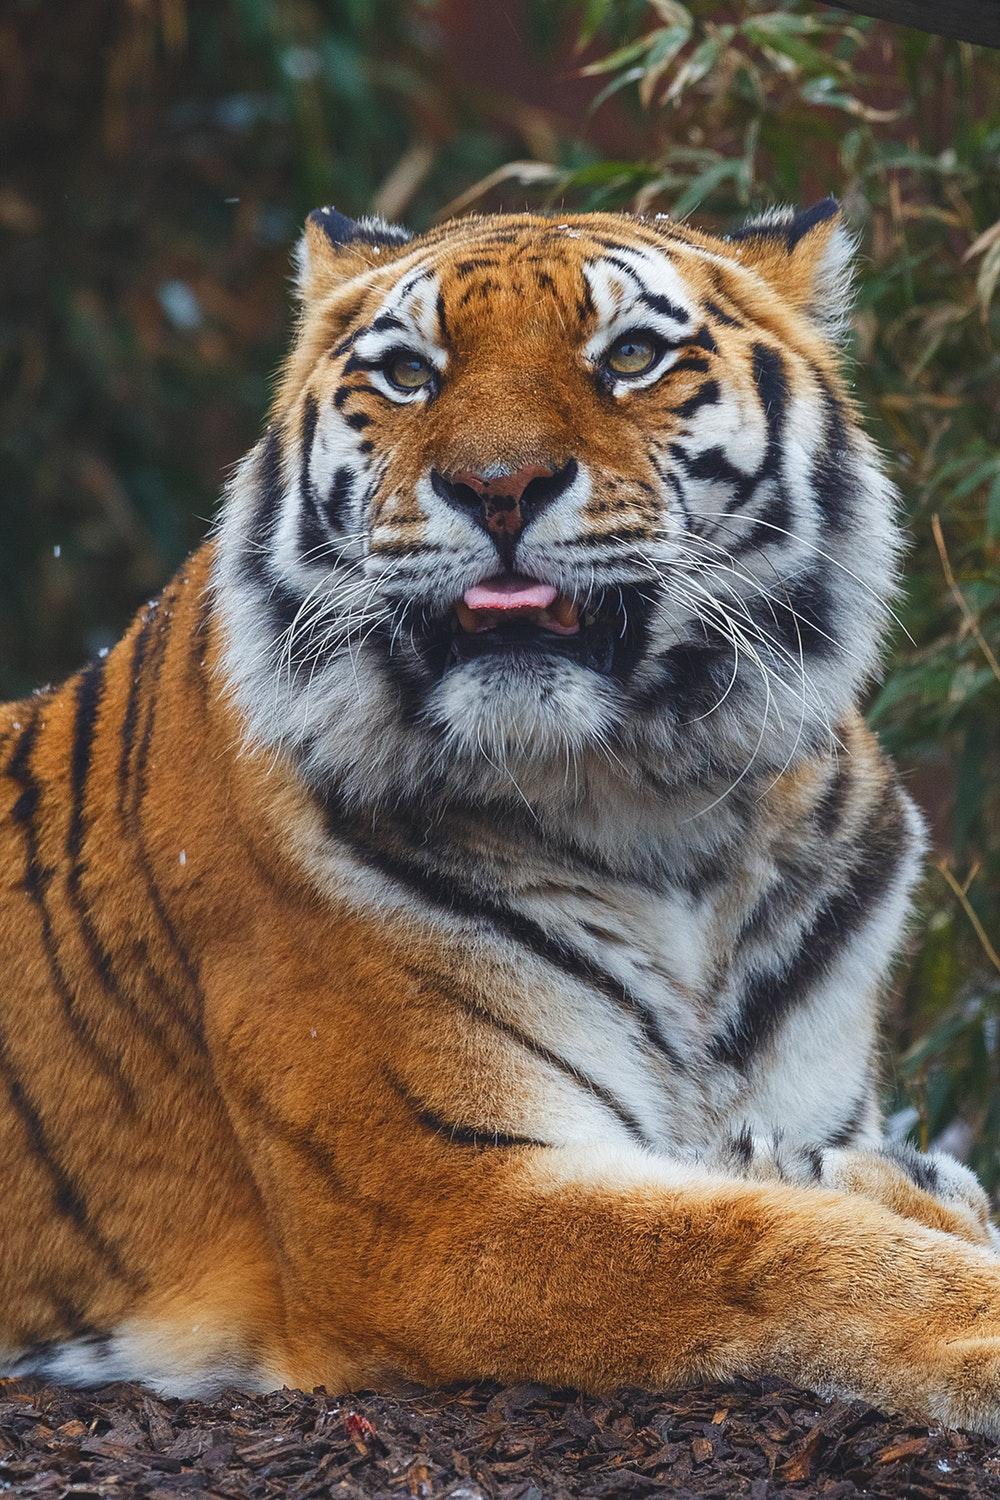 Tiger Portrait Picture. Download Free Image